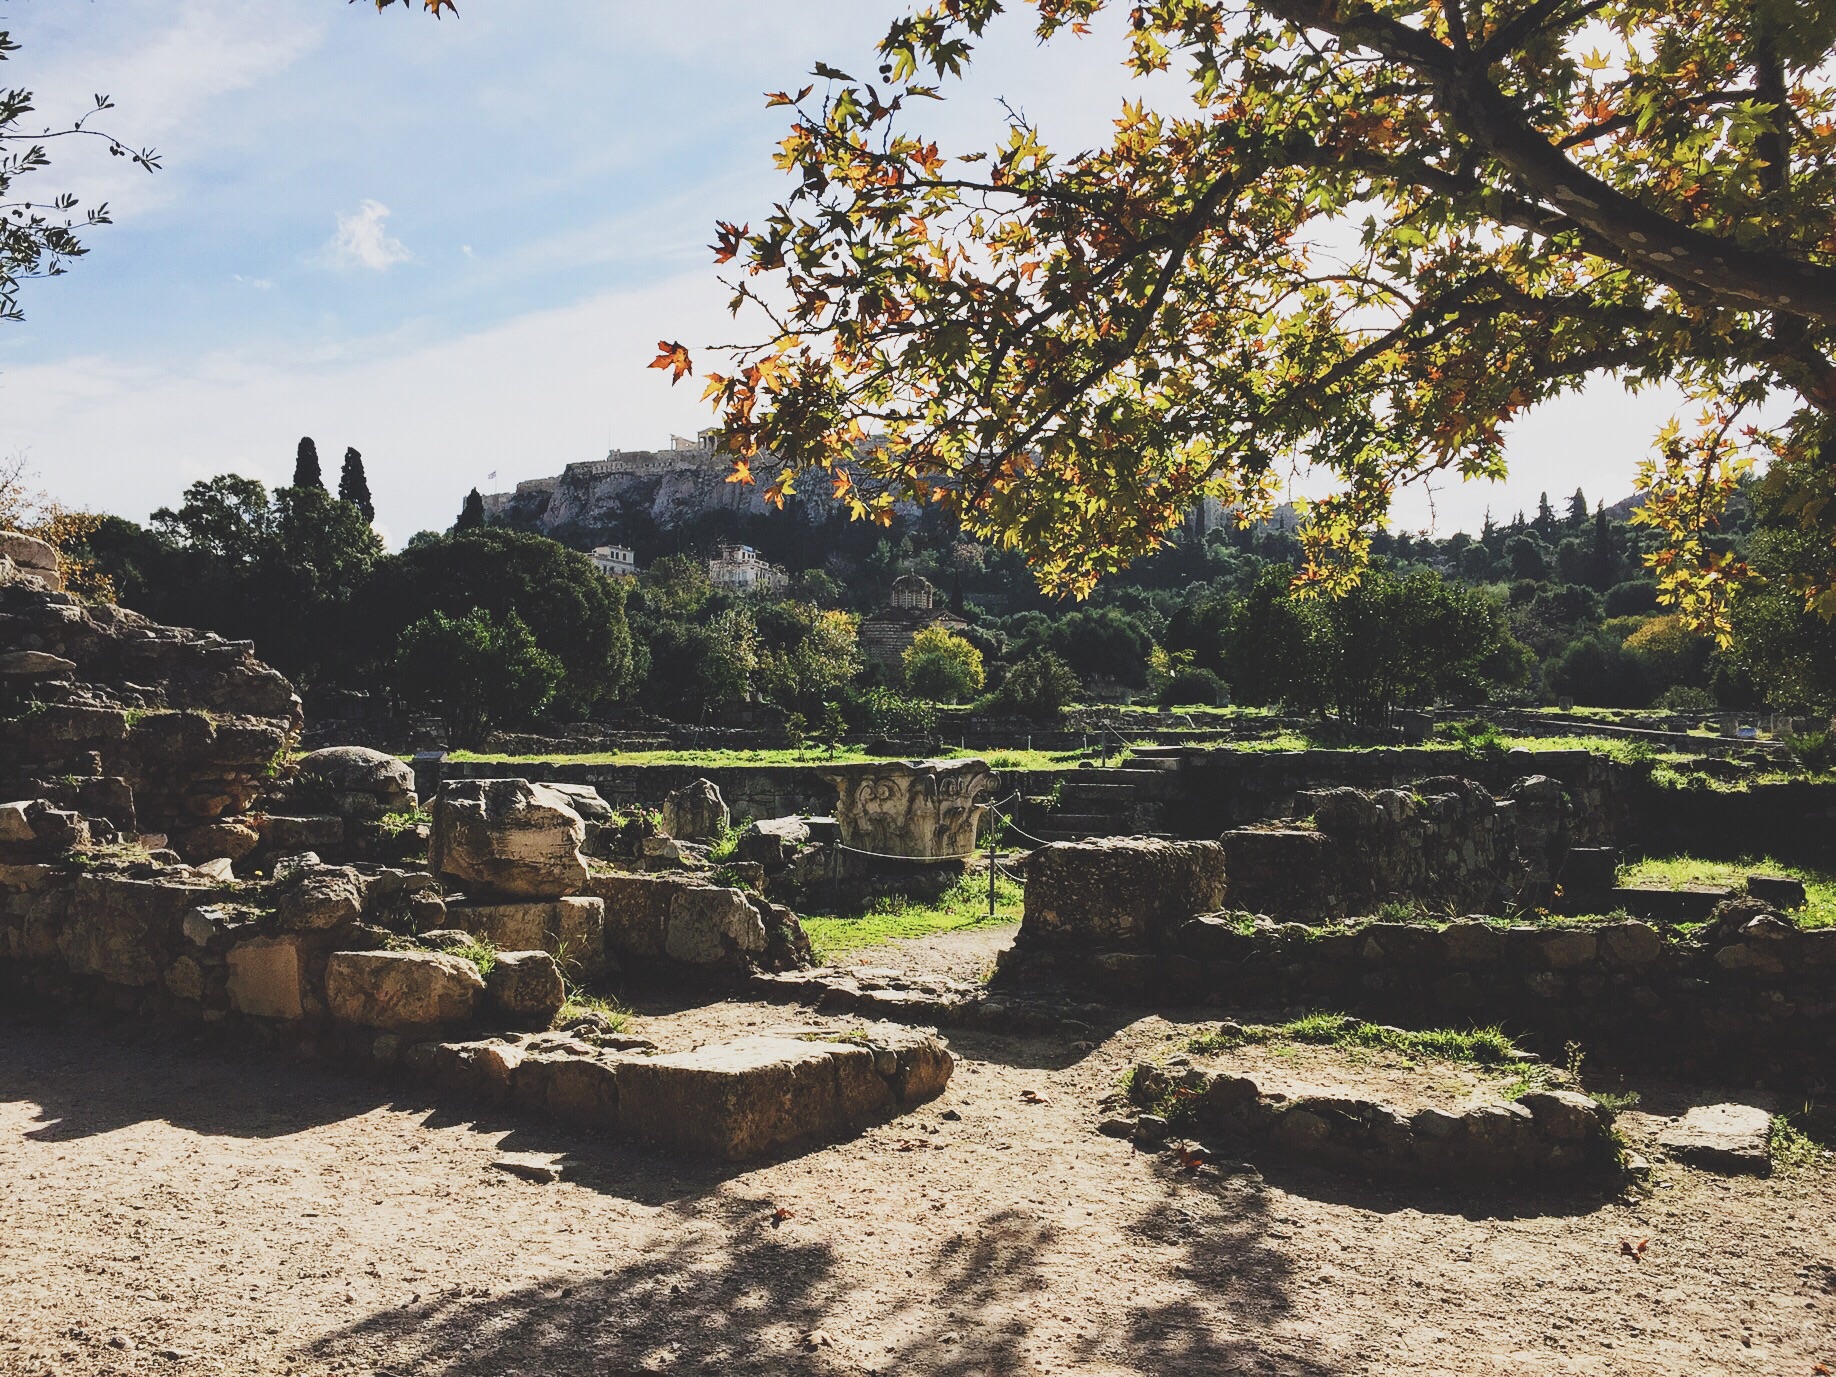 The Acropolis from the Agora